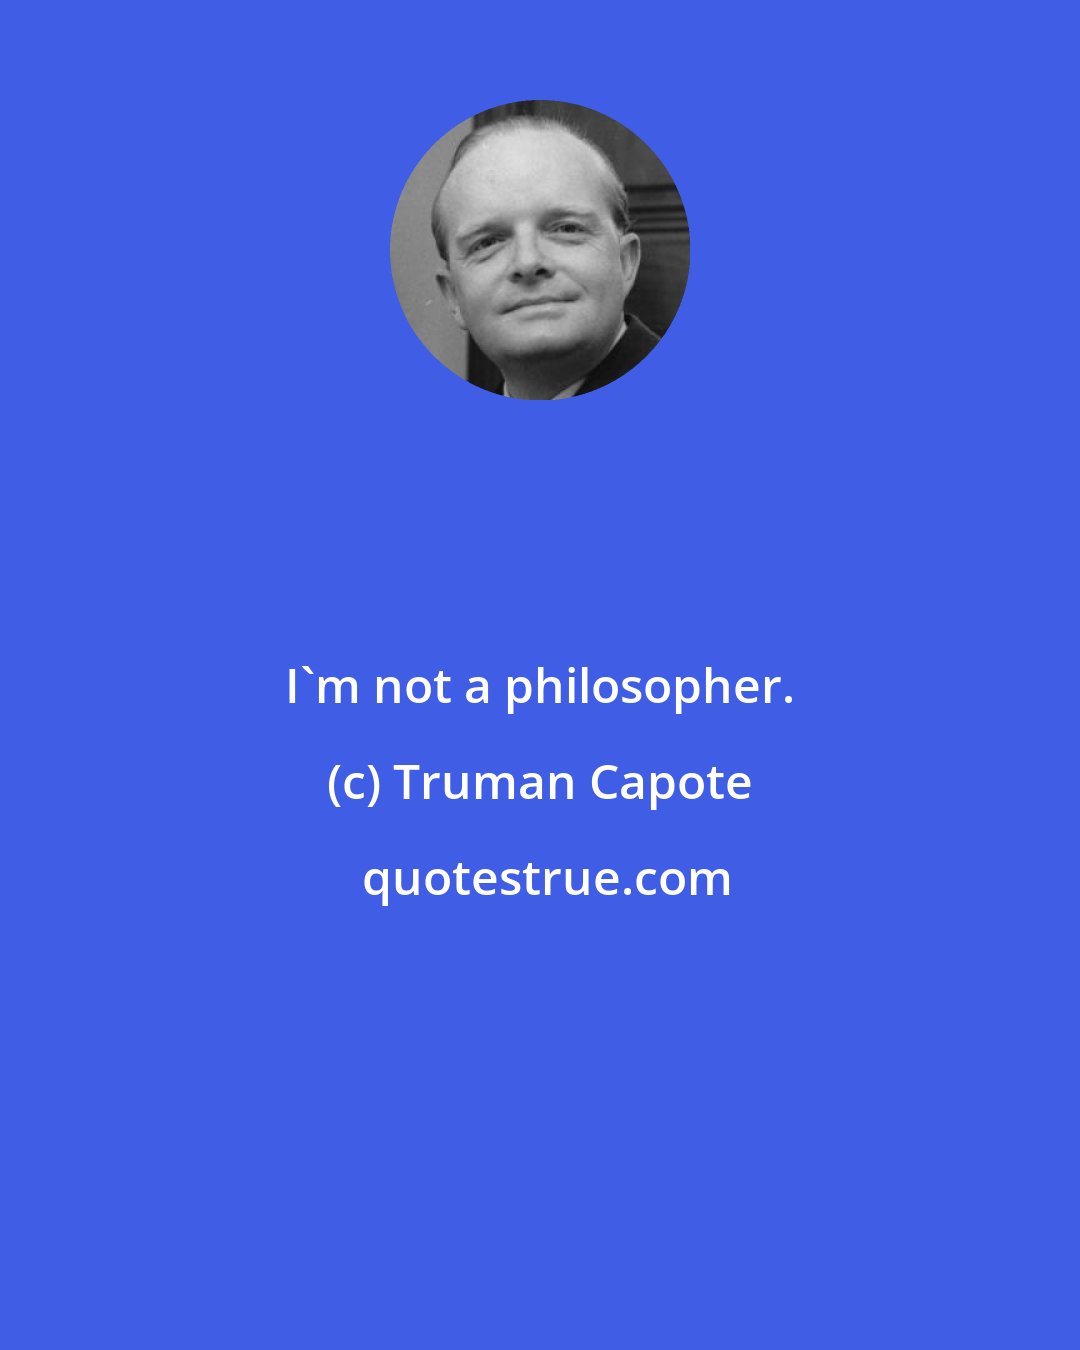 Truman Capote: I'm not a philosopher.